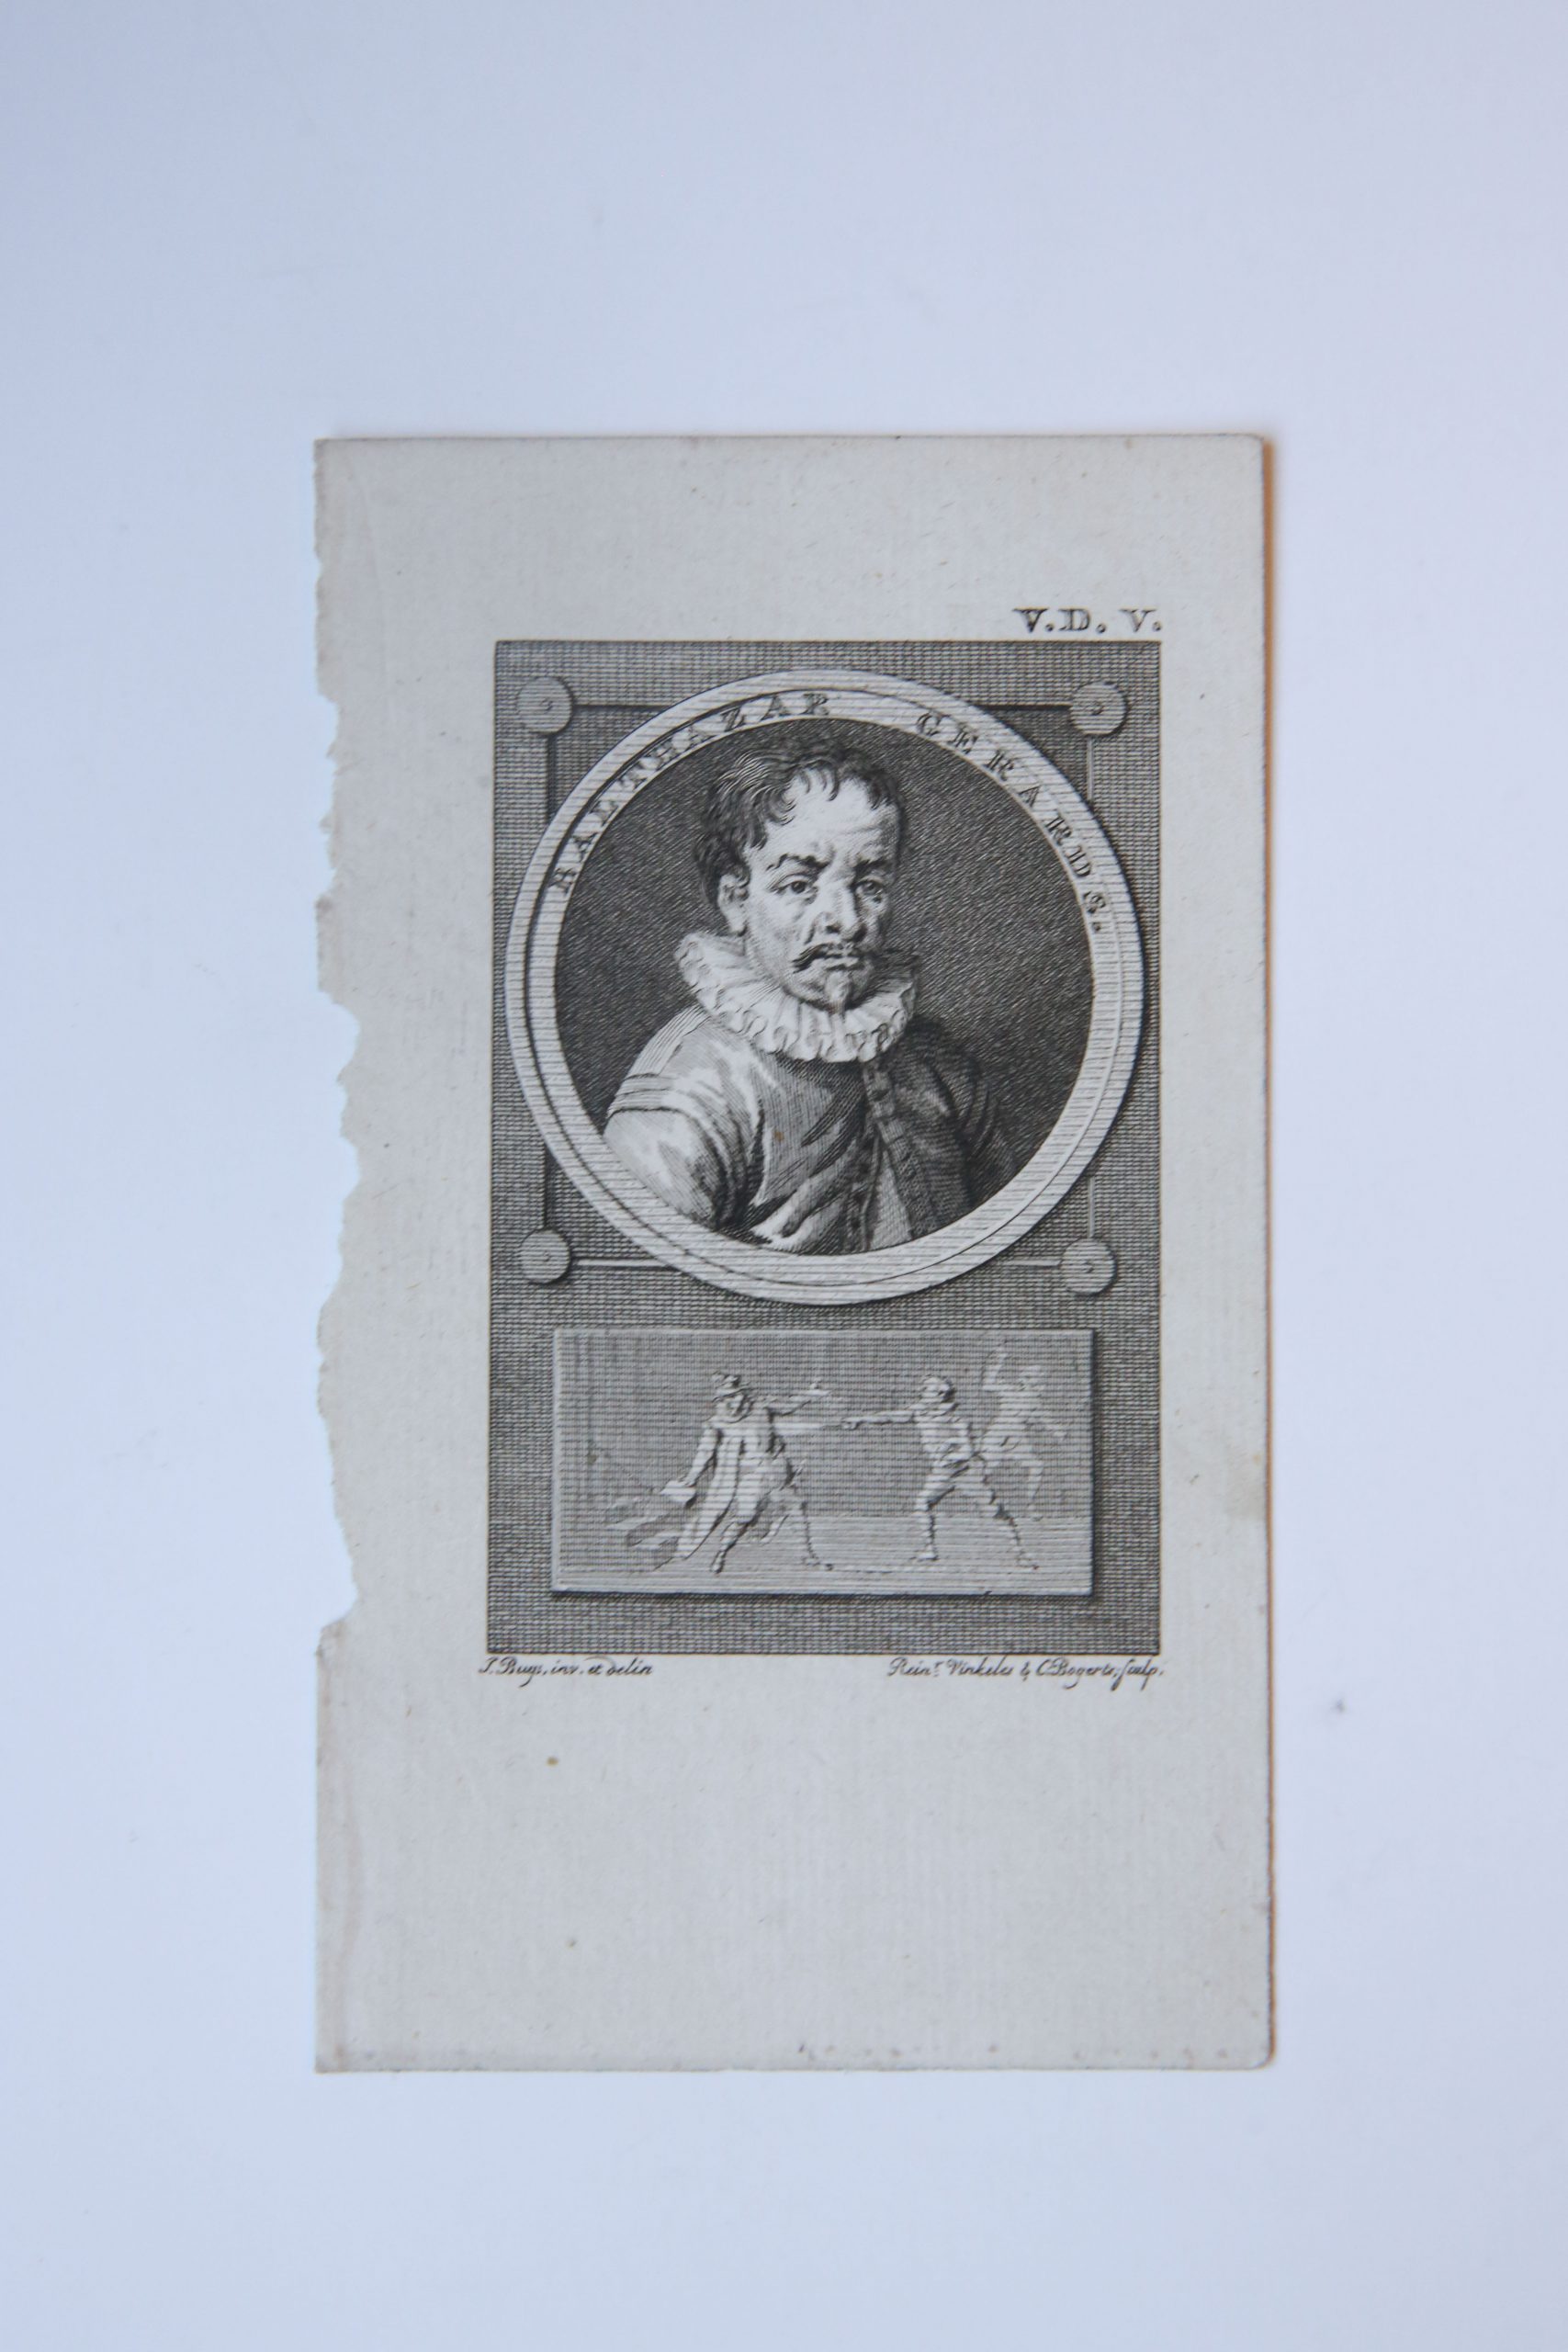 Balthazar Gerards, portrait and depiction of his assassination of Willem I